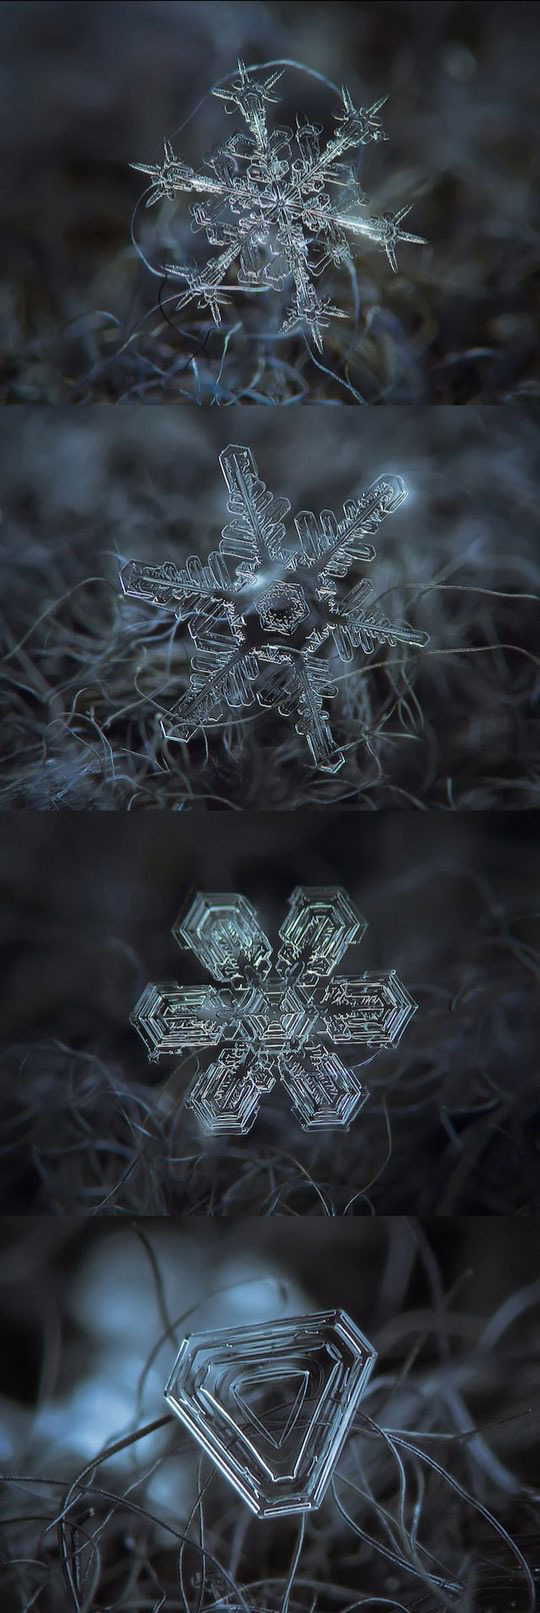 micro-photography of snowflakes - meme